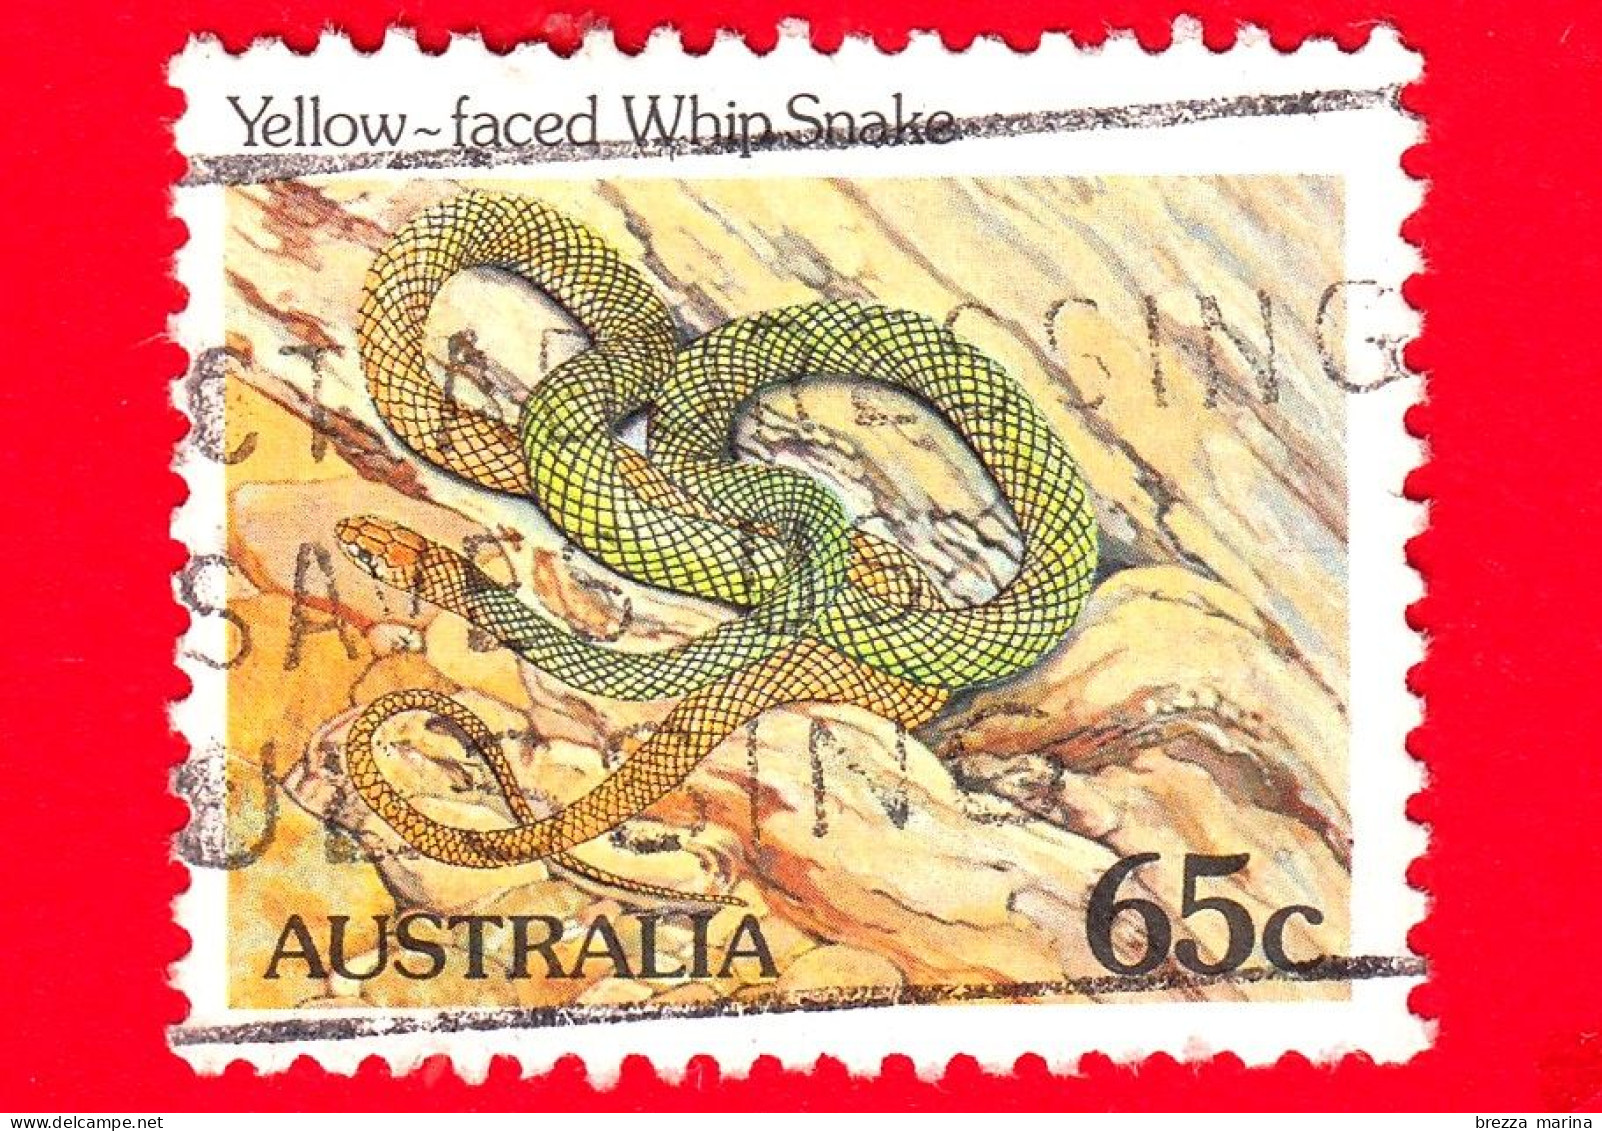 AUSTRALIA - Usato - 1984 - Rettili - Serpenti - Yellow-faced Whip Snake  - 65 - Used Stamps